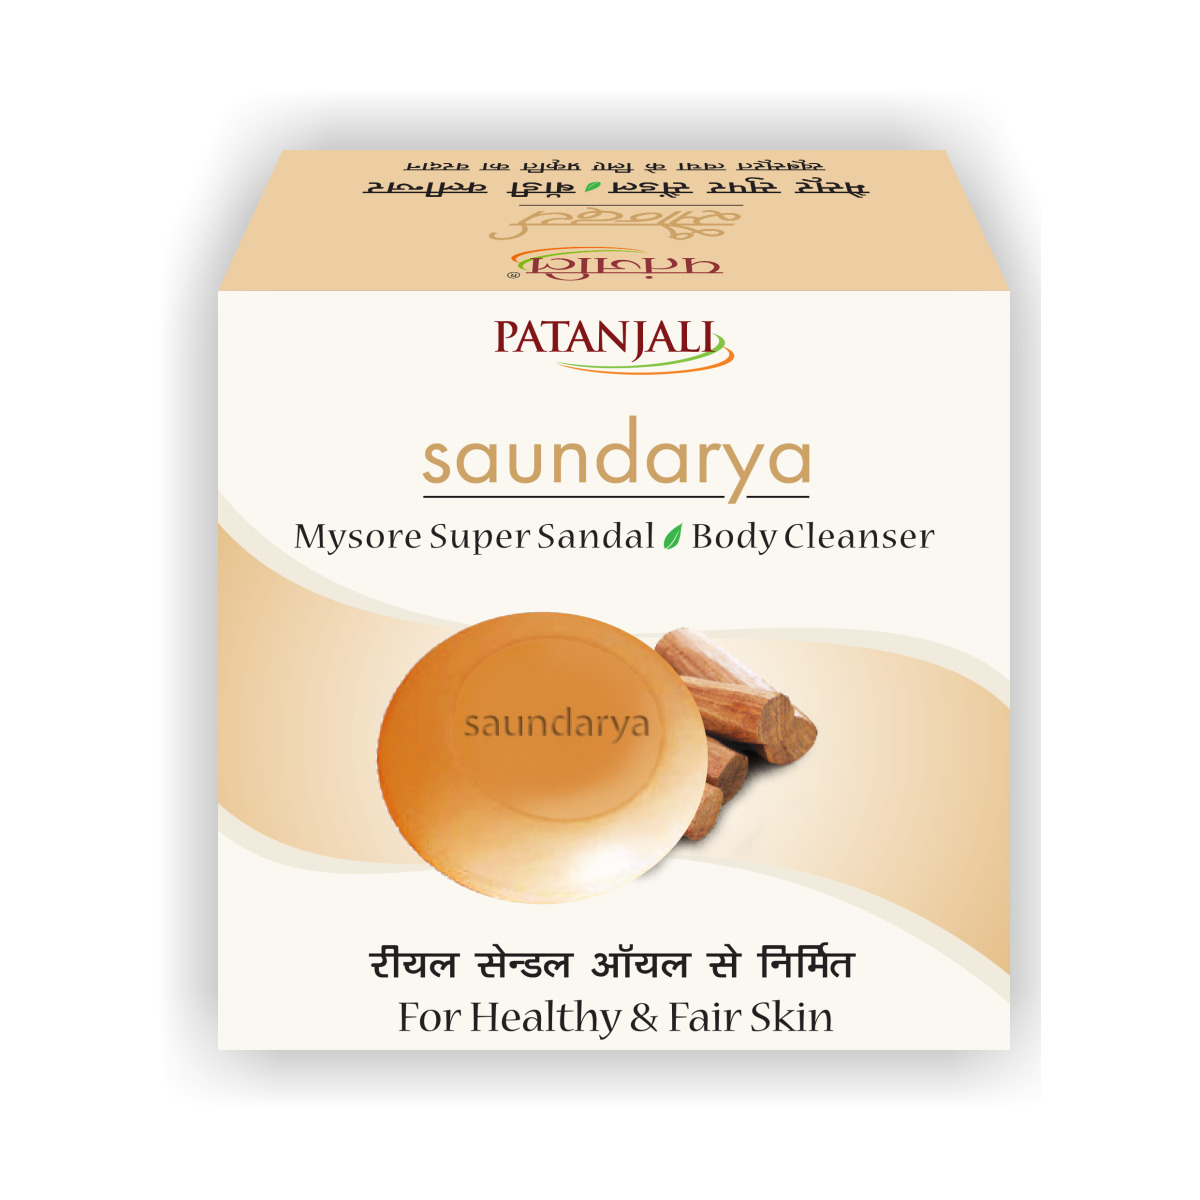 Patanjali Saundarya Sandal Body Cleanser